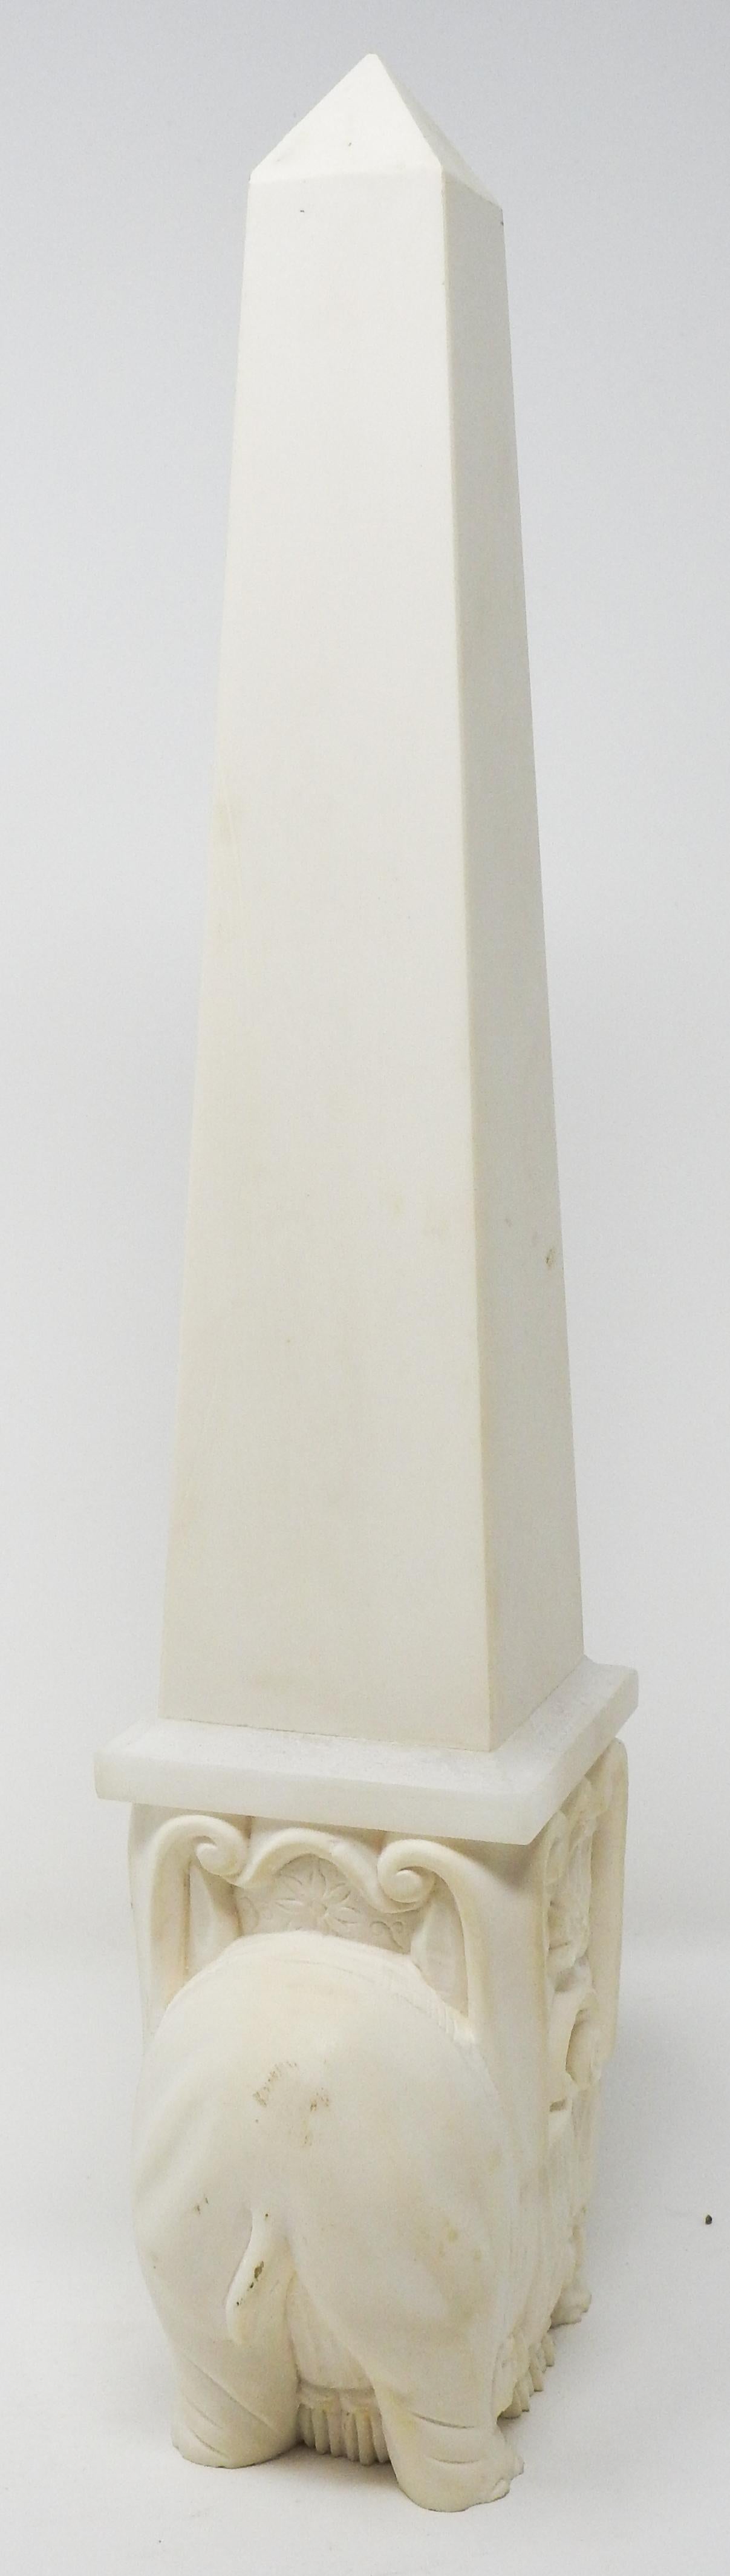 White Ceramic and Glass Elephant Obelisk, Vintage For Sale 3